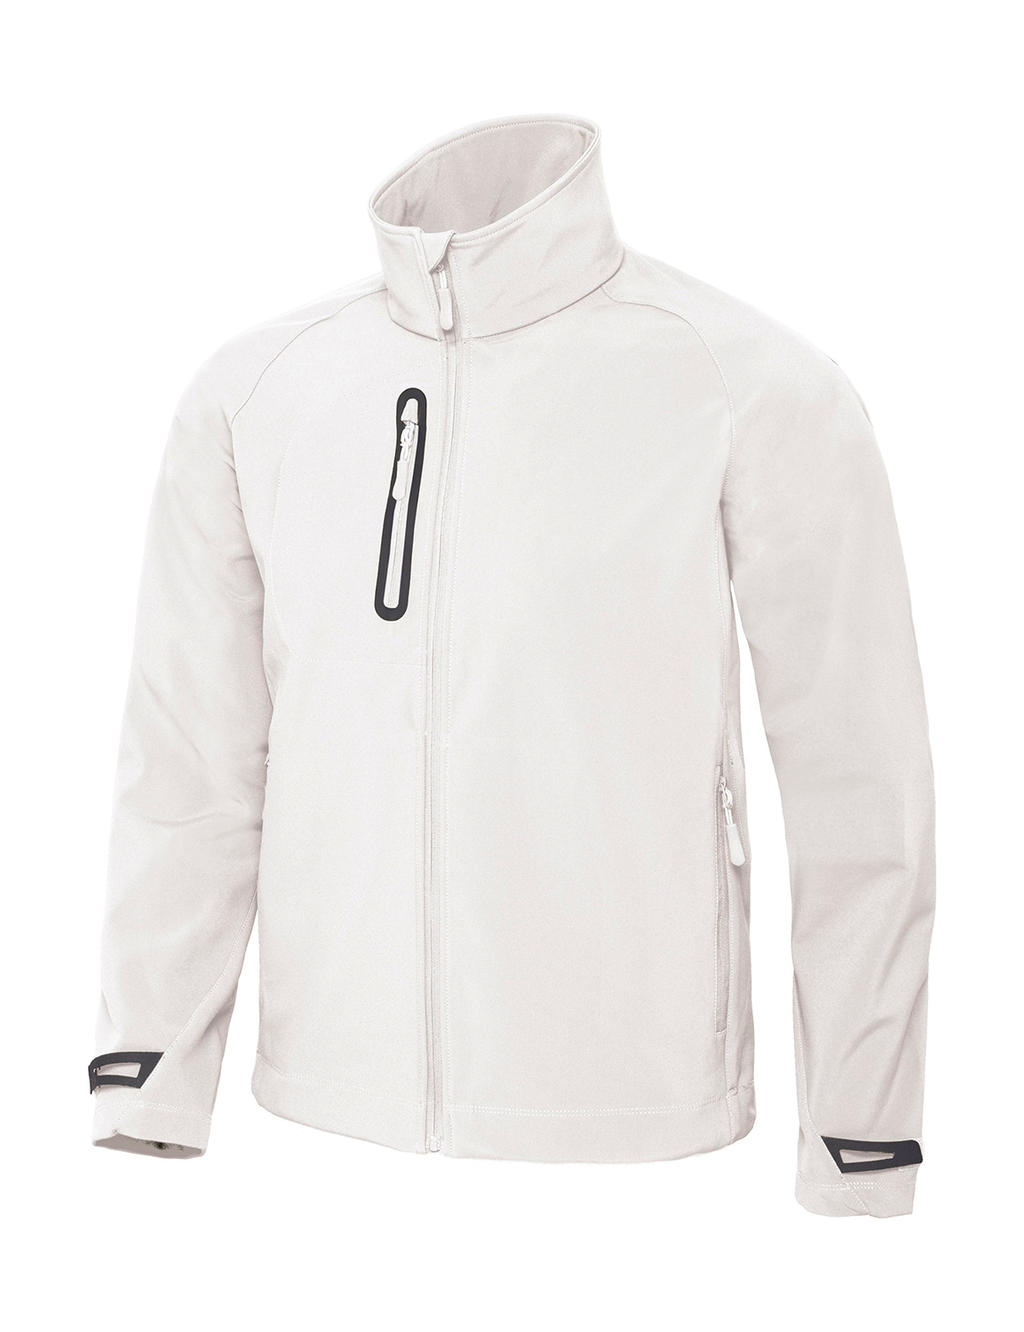  X-Lite Softshell/men Jacket in Farbe White